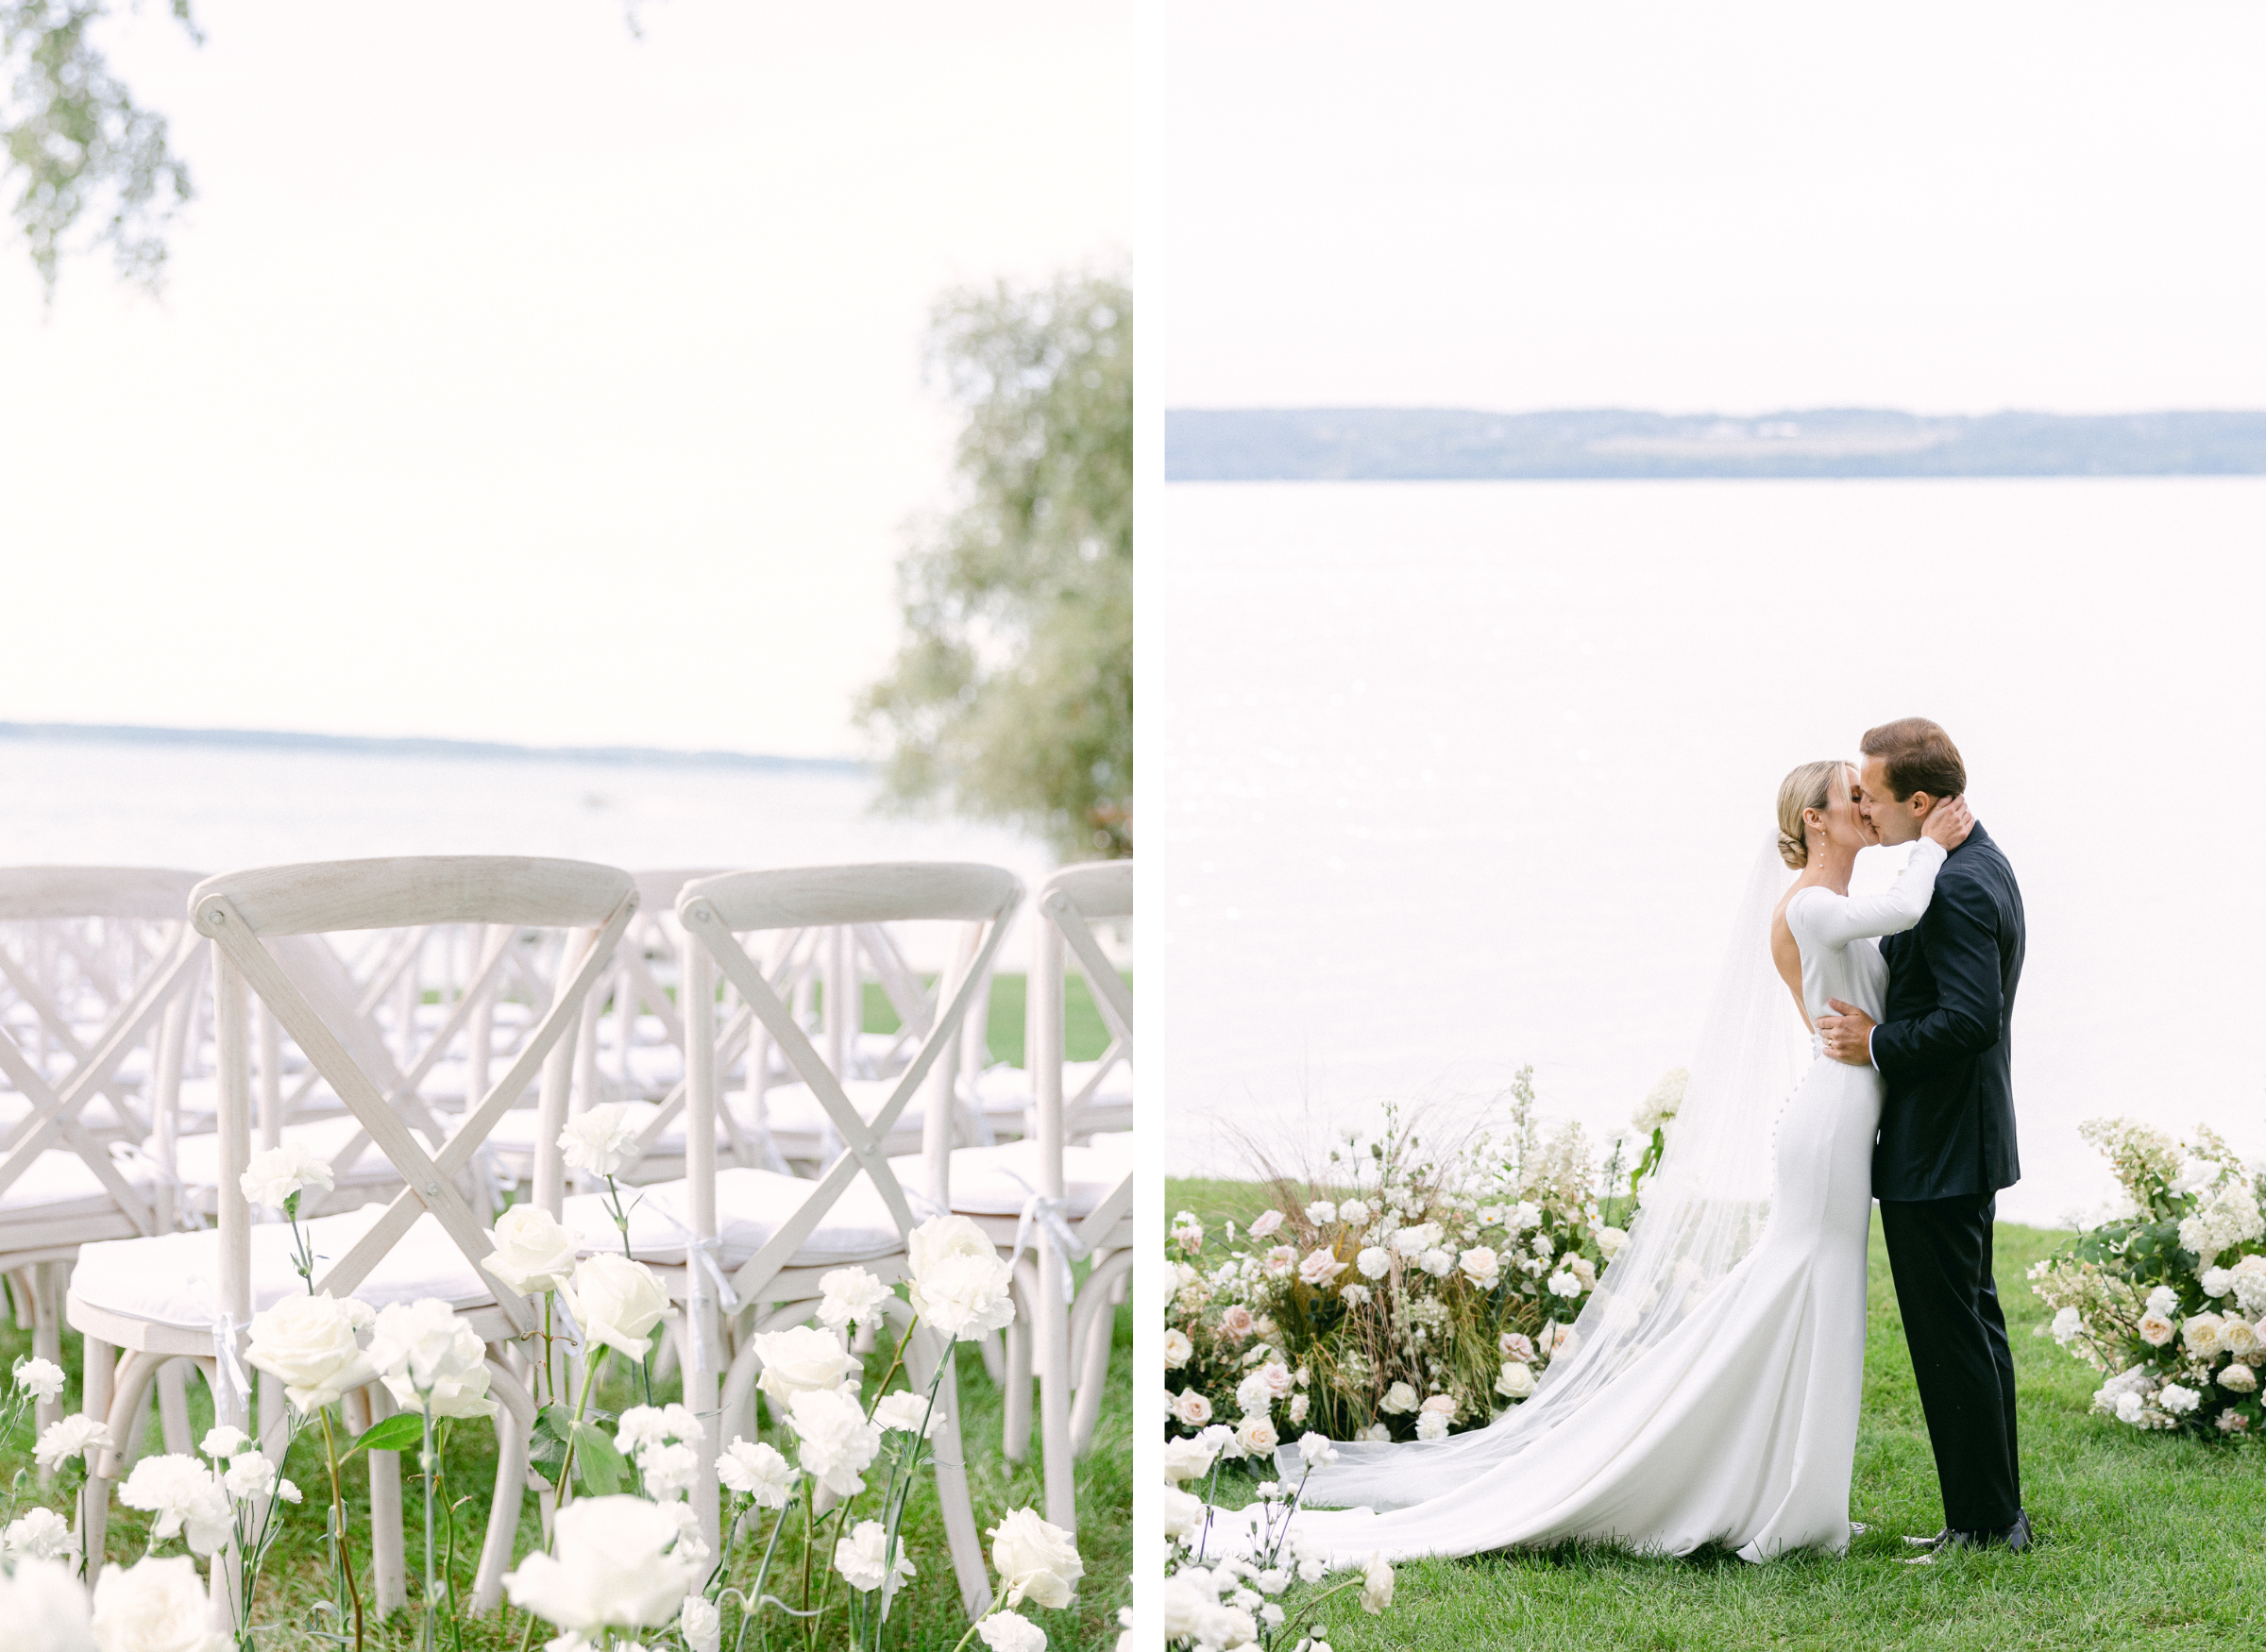 shley & Max's Modern Fall Inns of Aurora Wedding Ceremony_Verve Event Co.